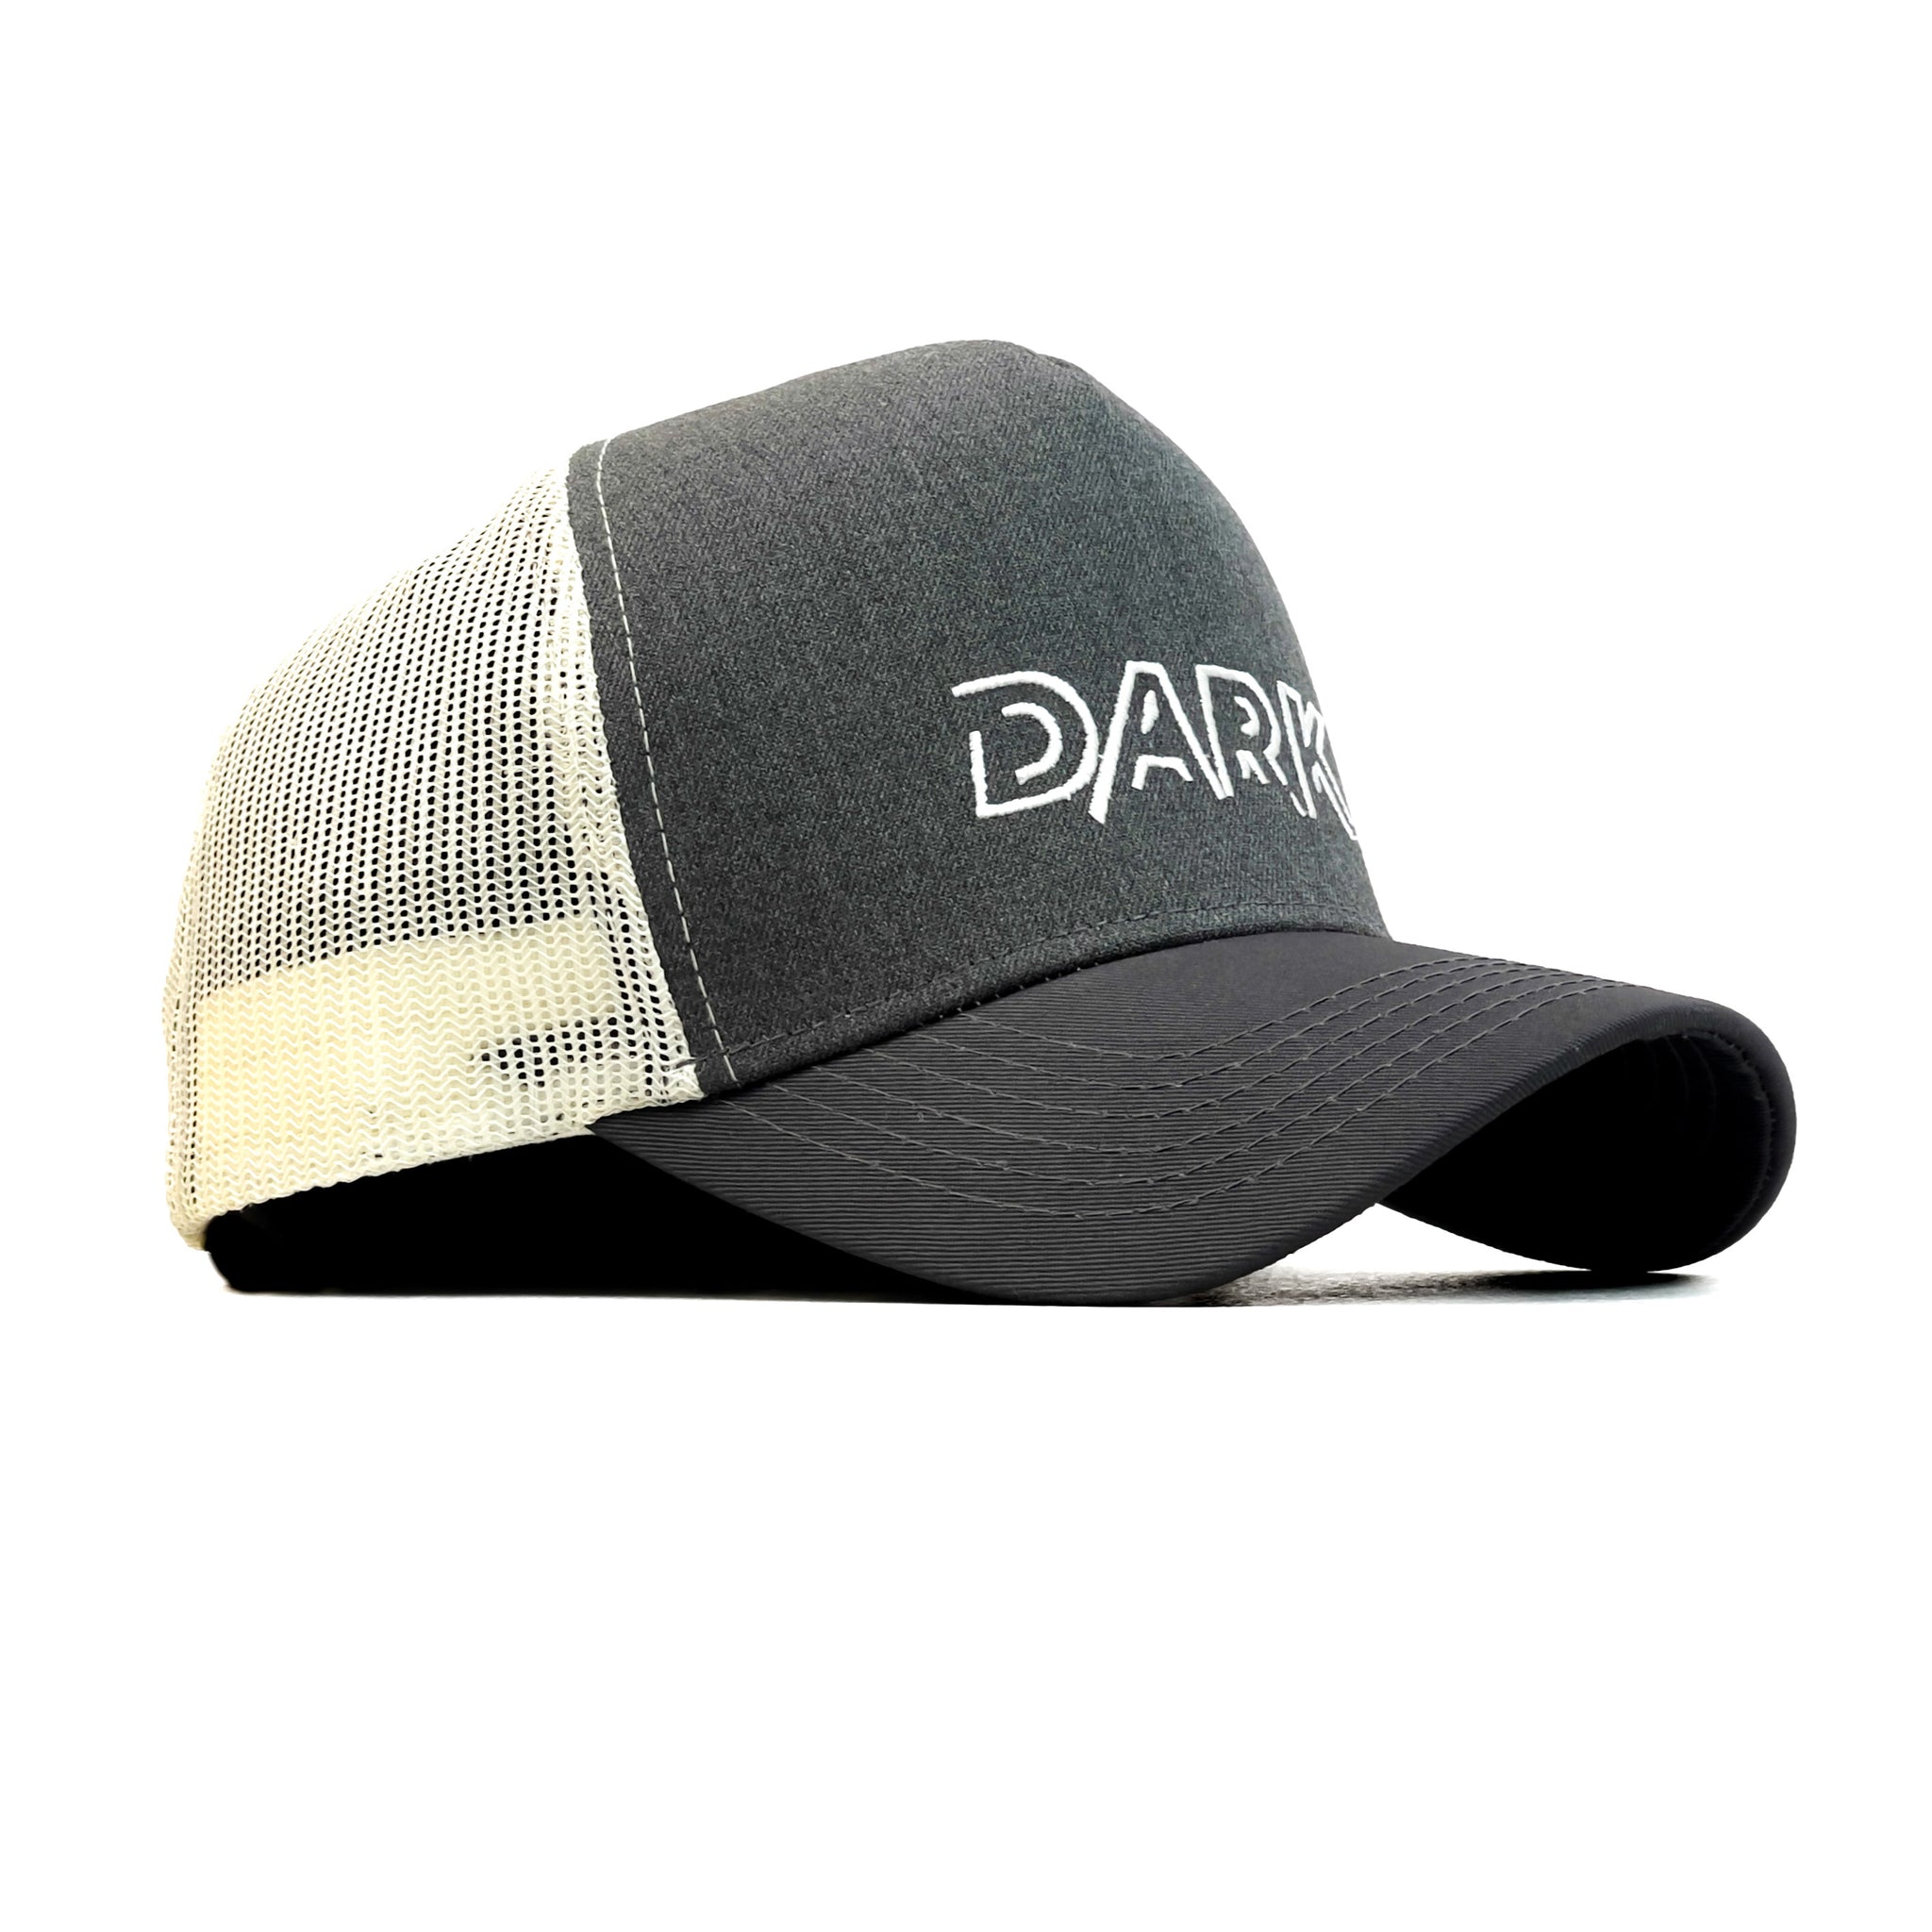 HEAD GEAR DARK TRUCKER CAP